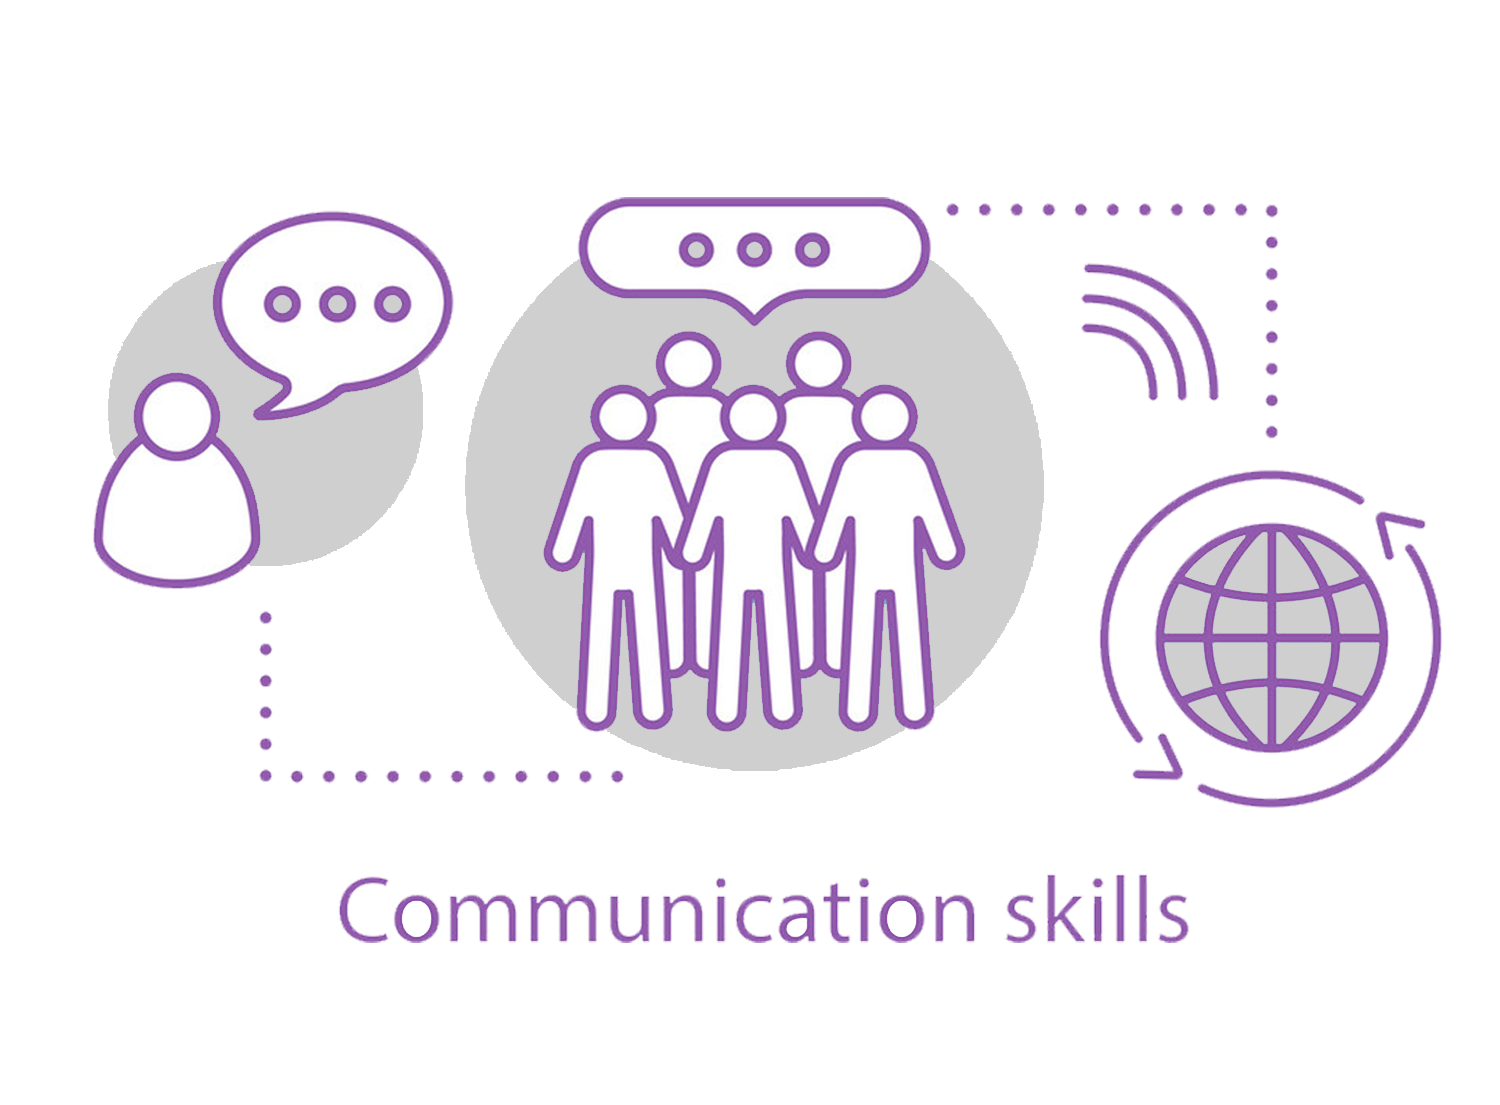 effective communication skills training course